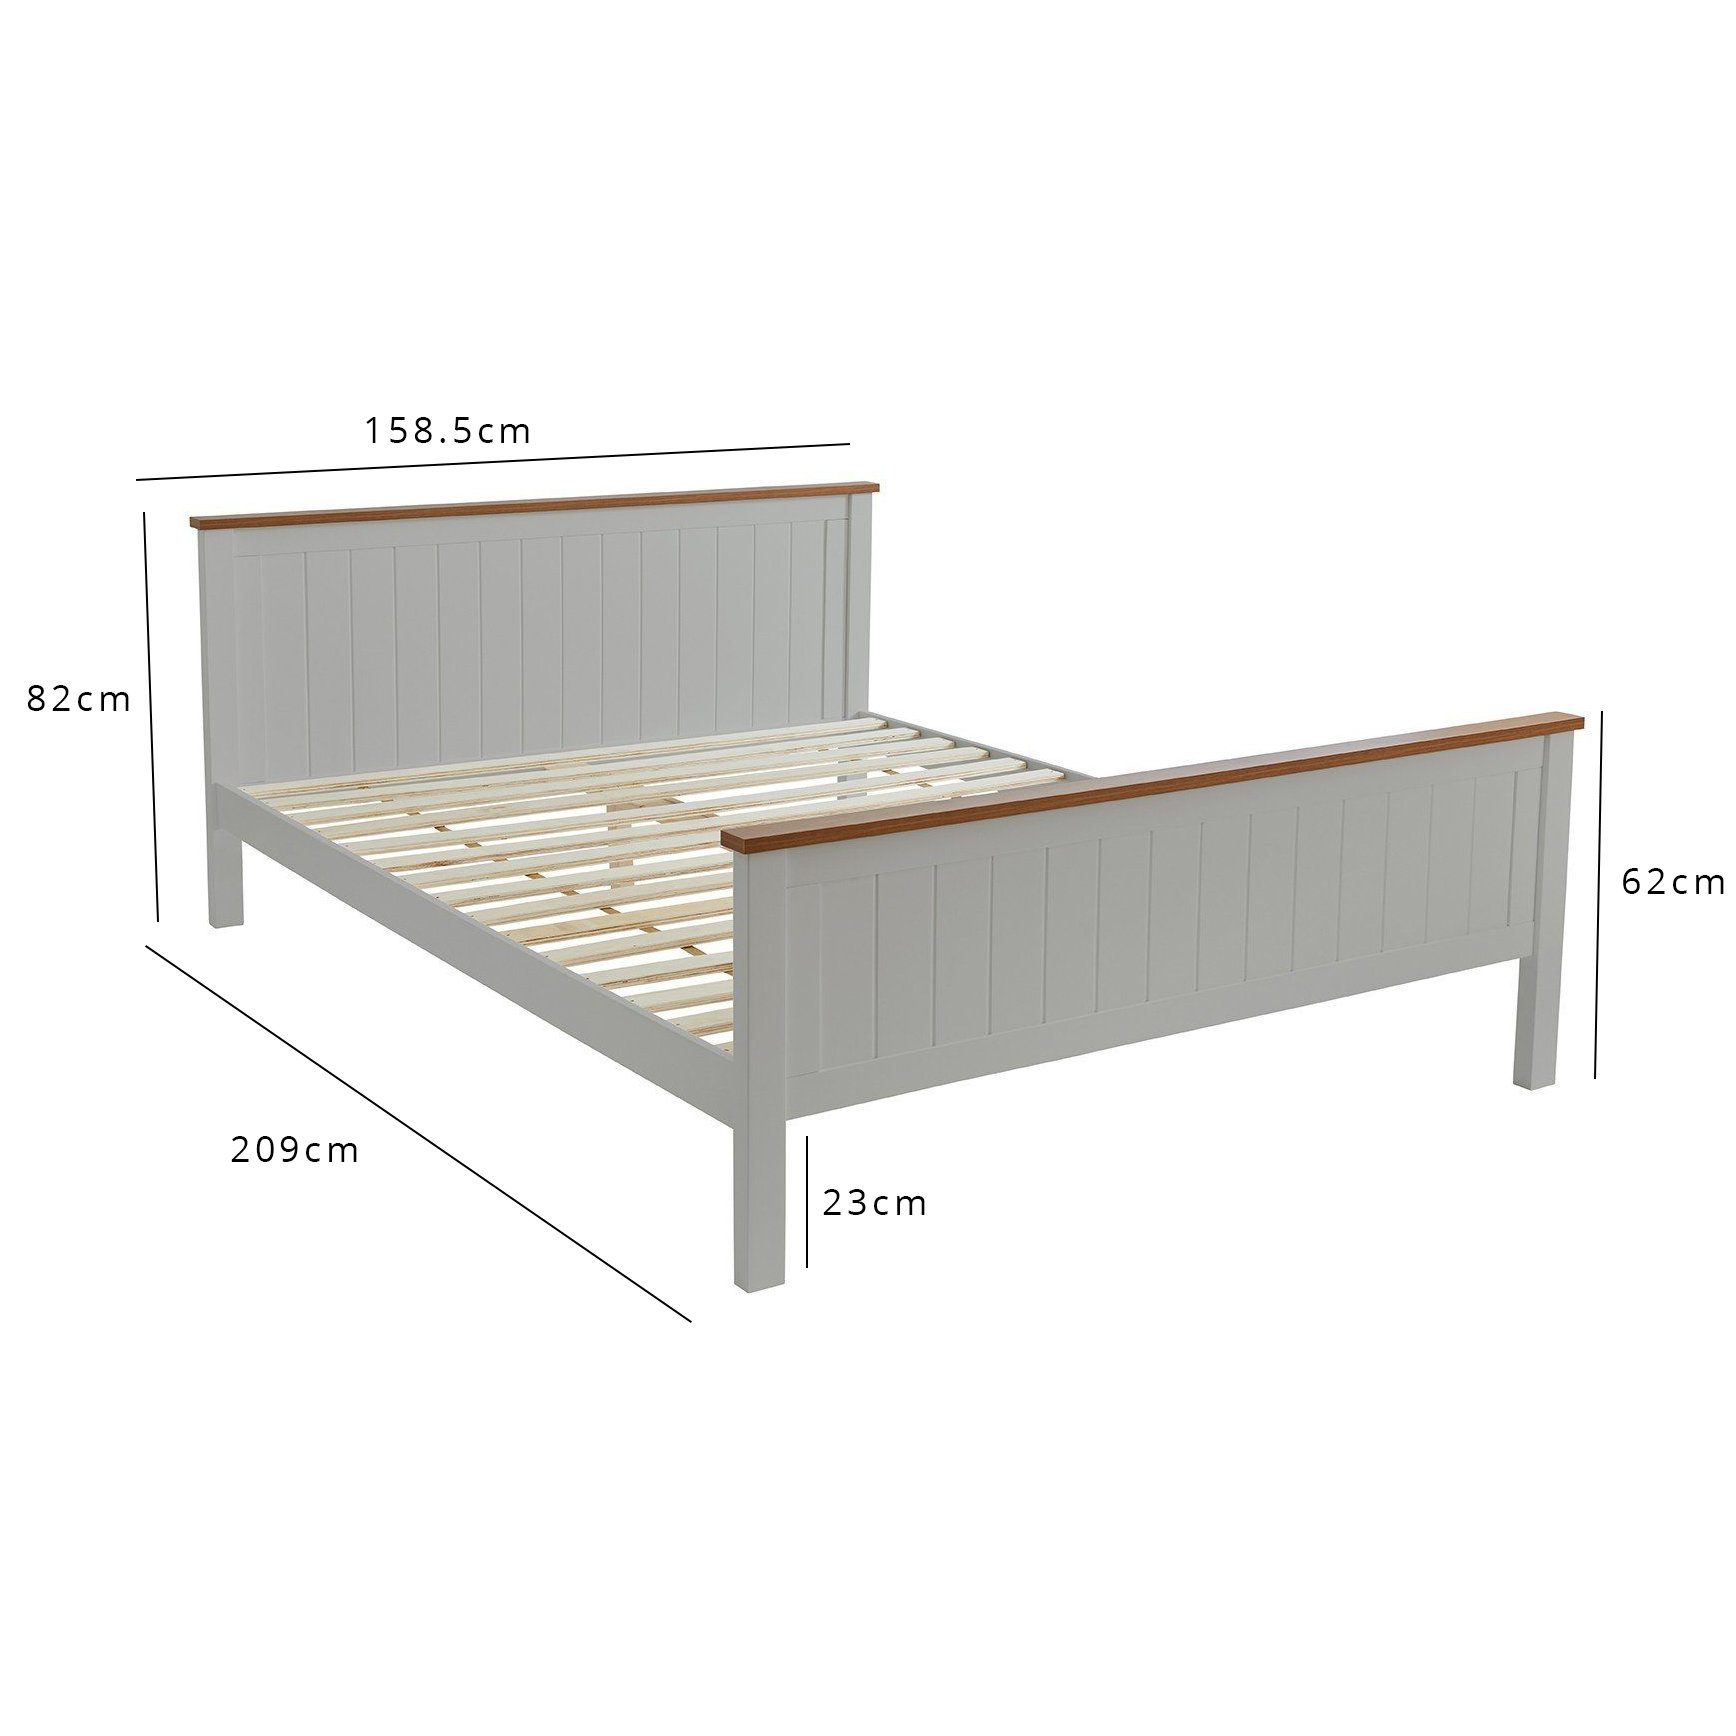 Grey wooden double bed - Laura James